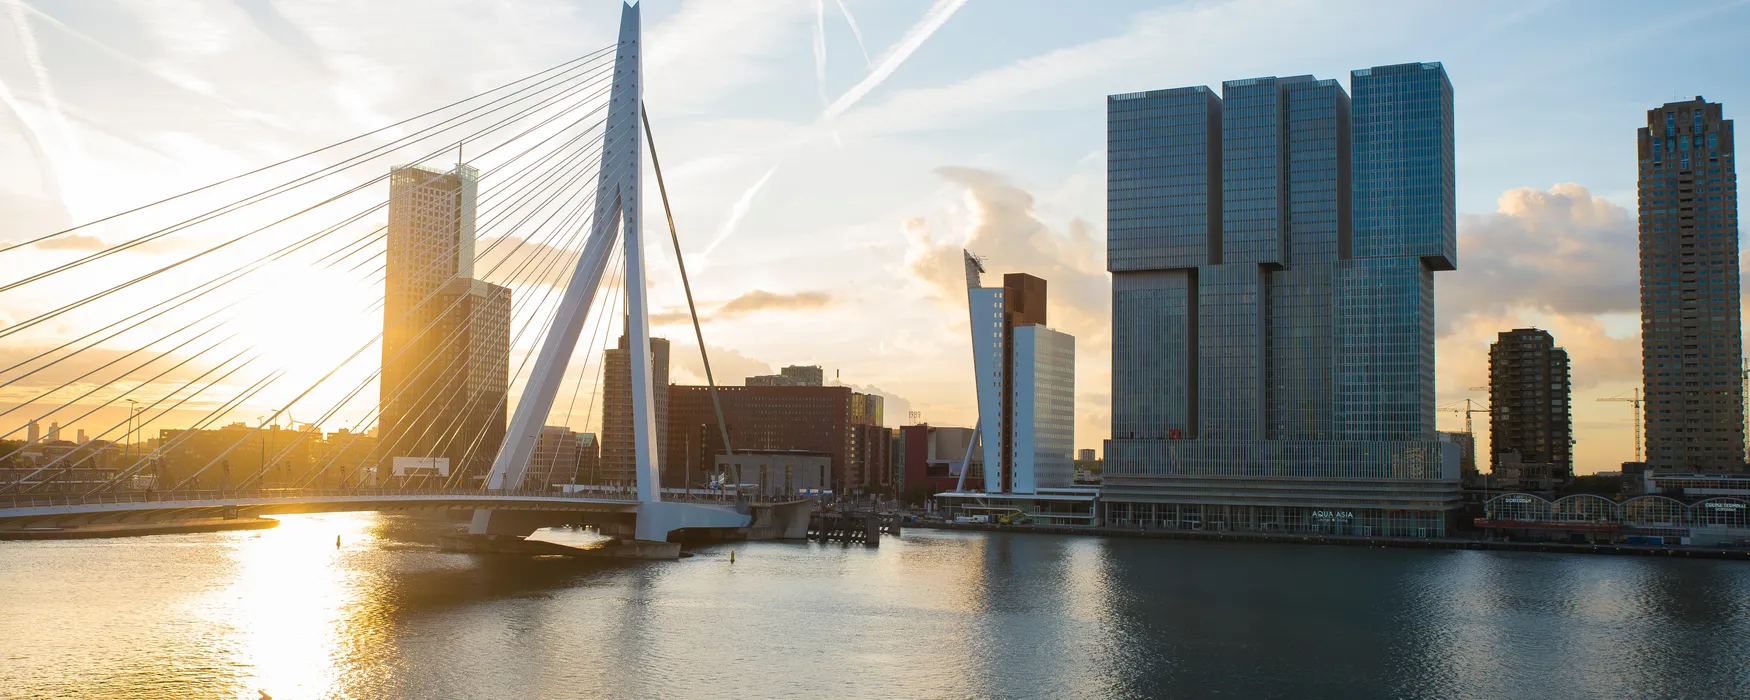 The Dutch Manhattan - explore two amazing views in Rotterdam